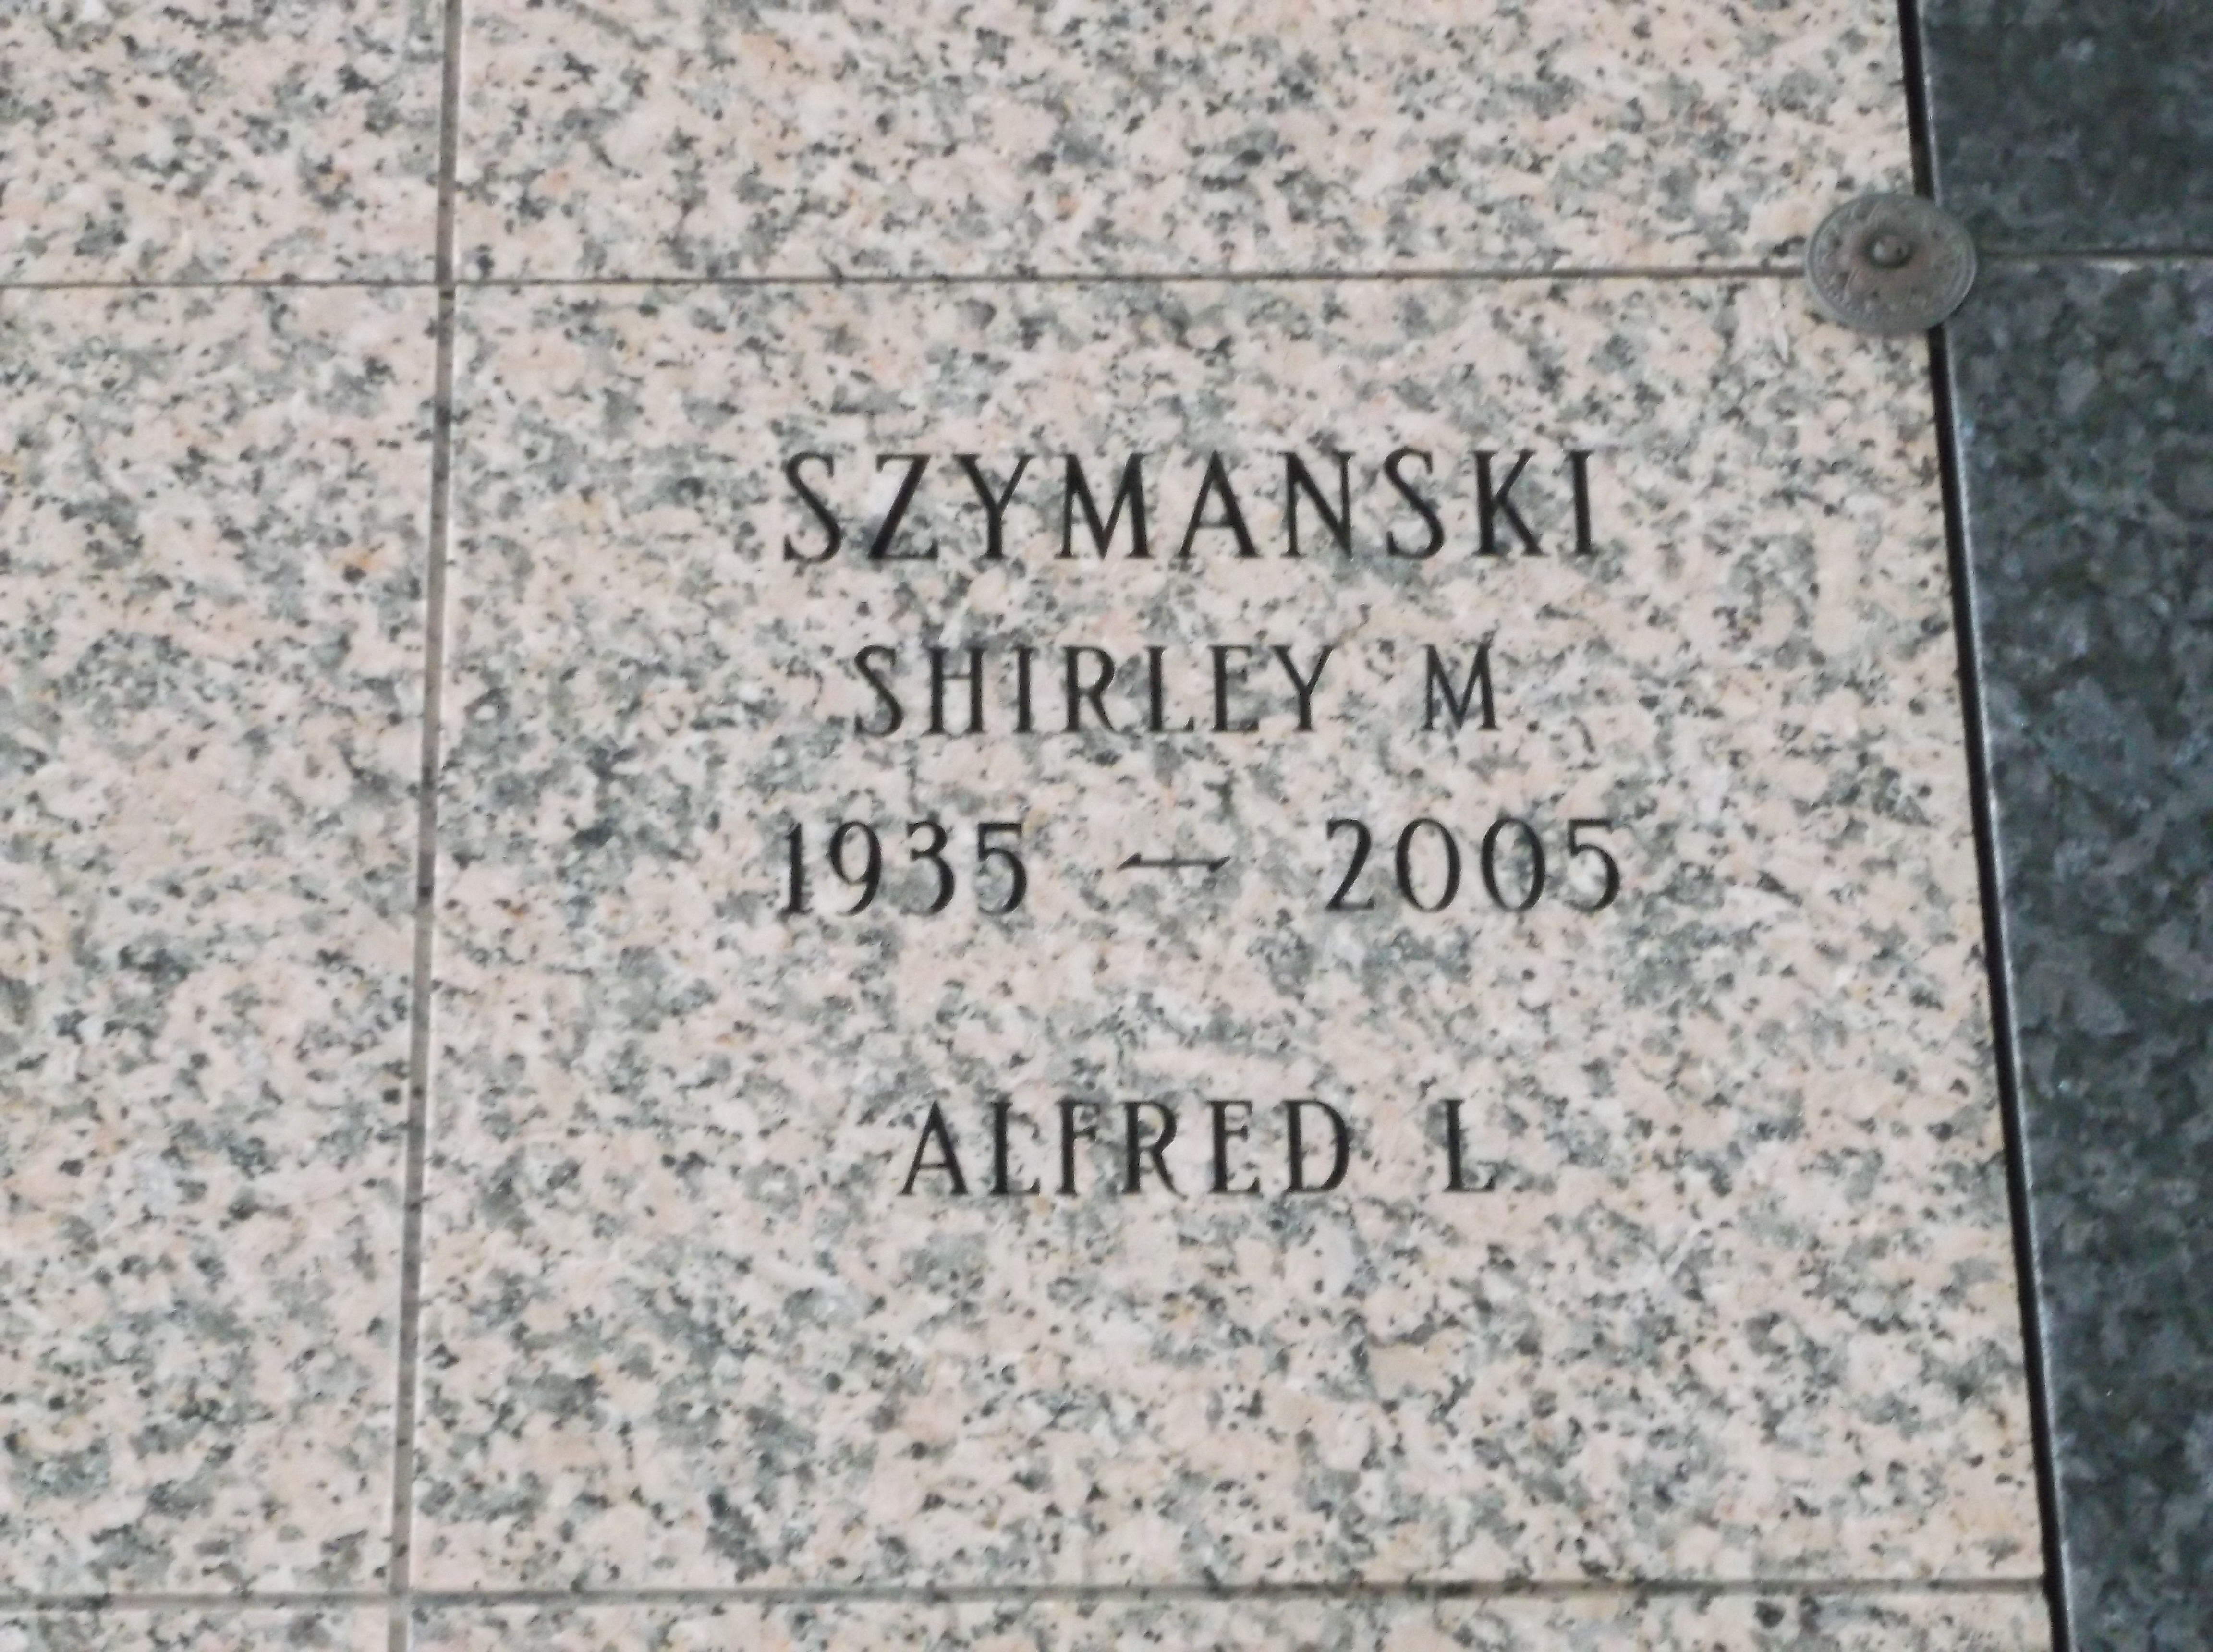 Shirley M Szymanski